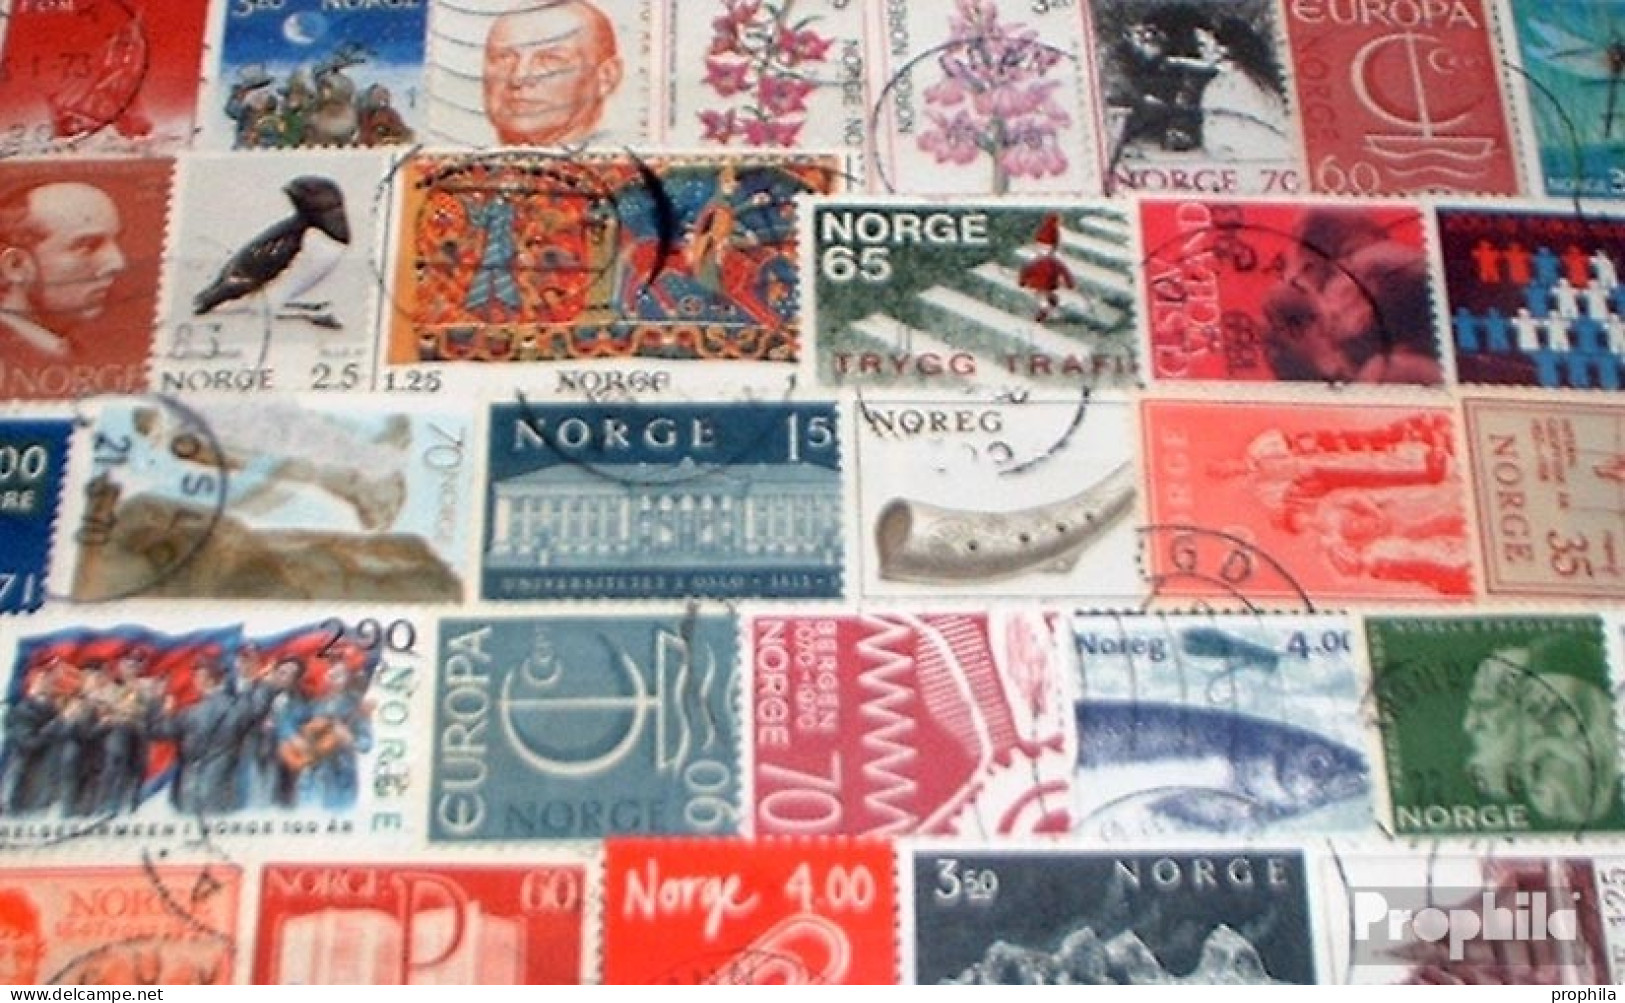 Norwegen 100 Verschiedene  Sondermarken Und Großformate - Colecciones